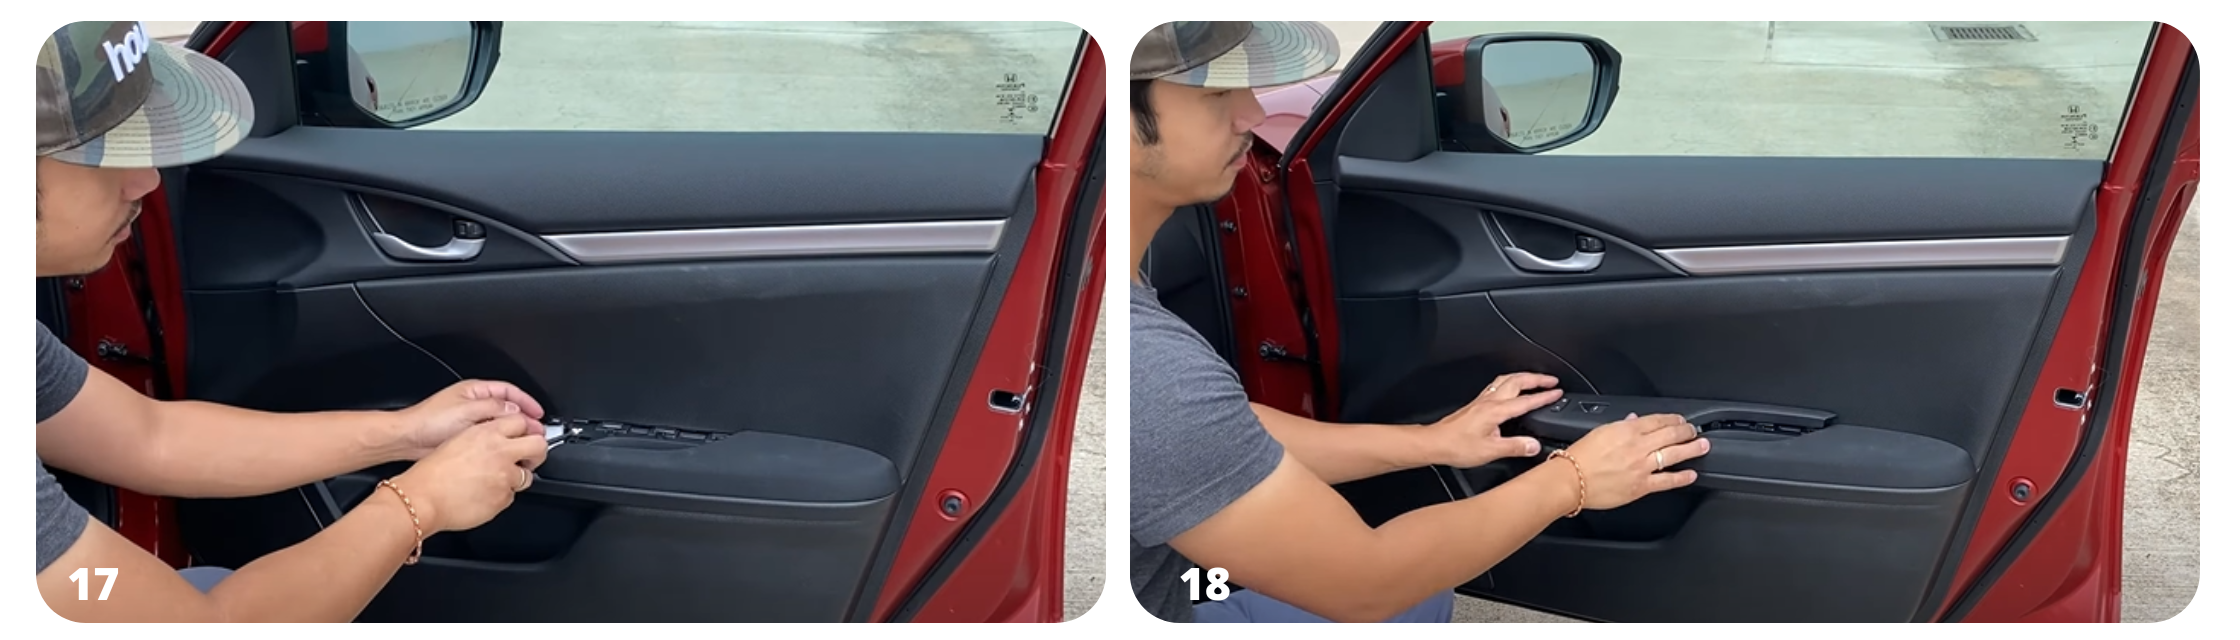 Replacing a 2016-2021 Honda Civic Side View Mirror steps 17-18